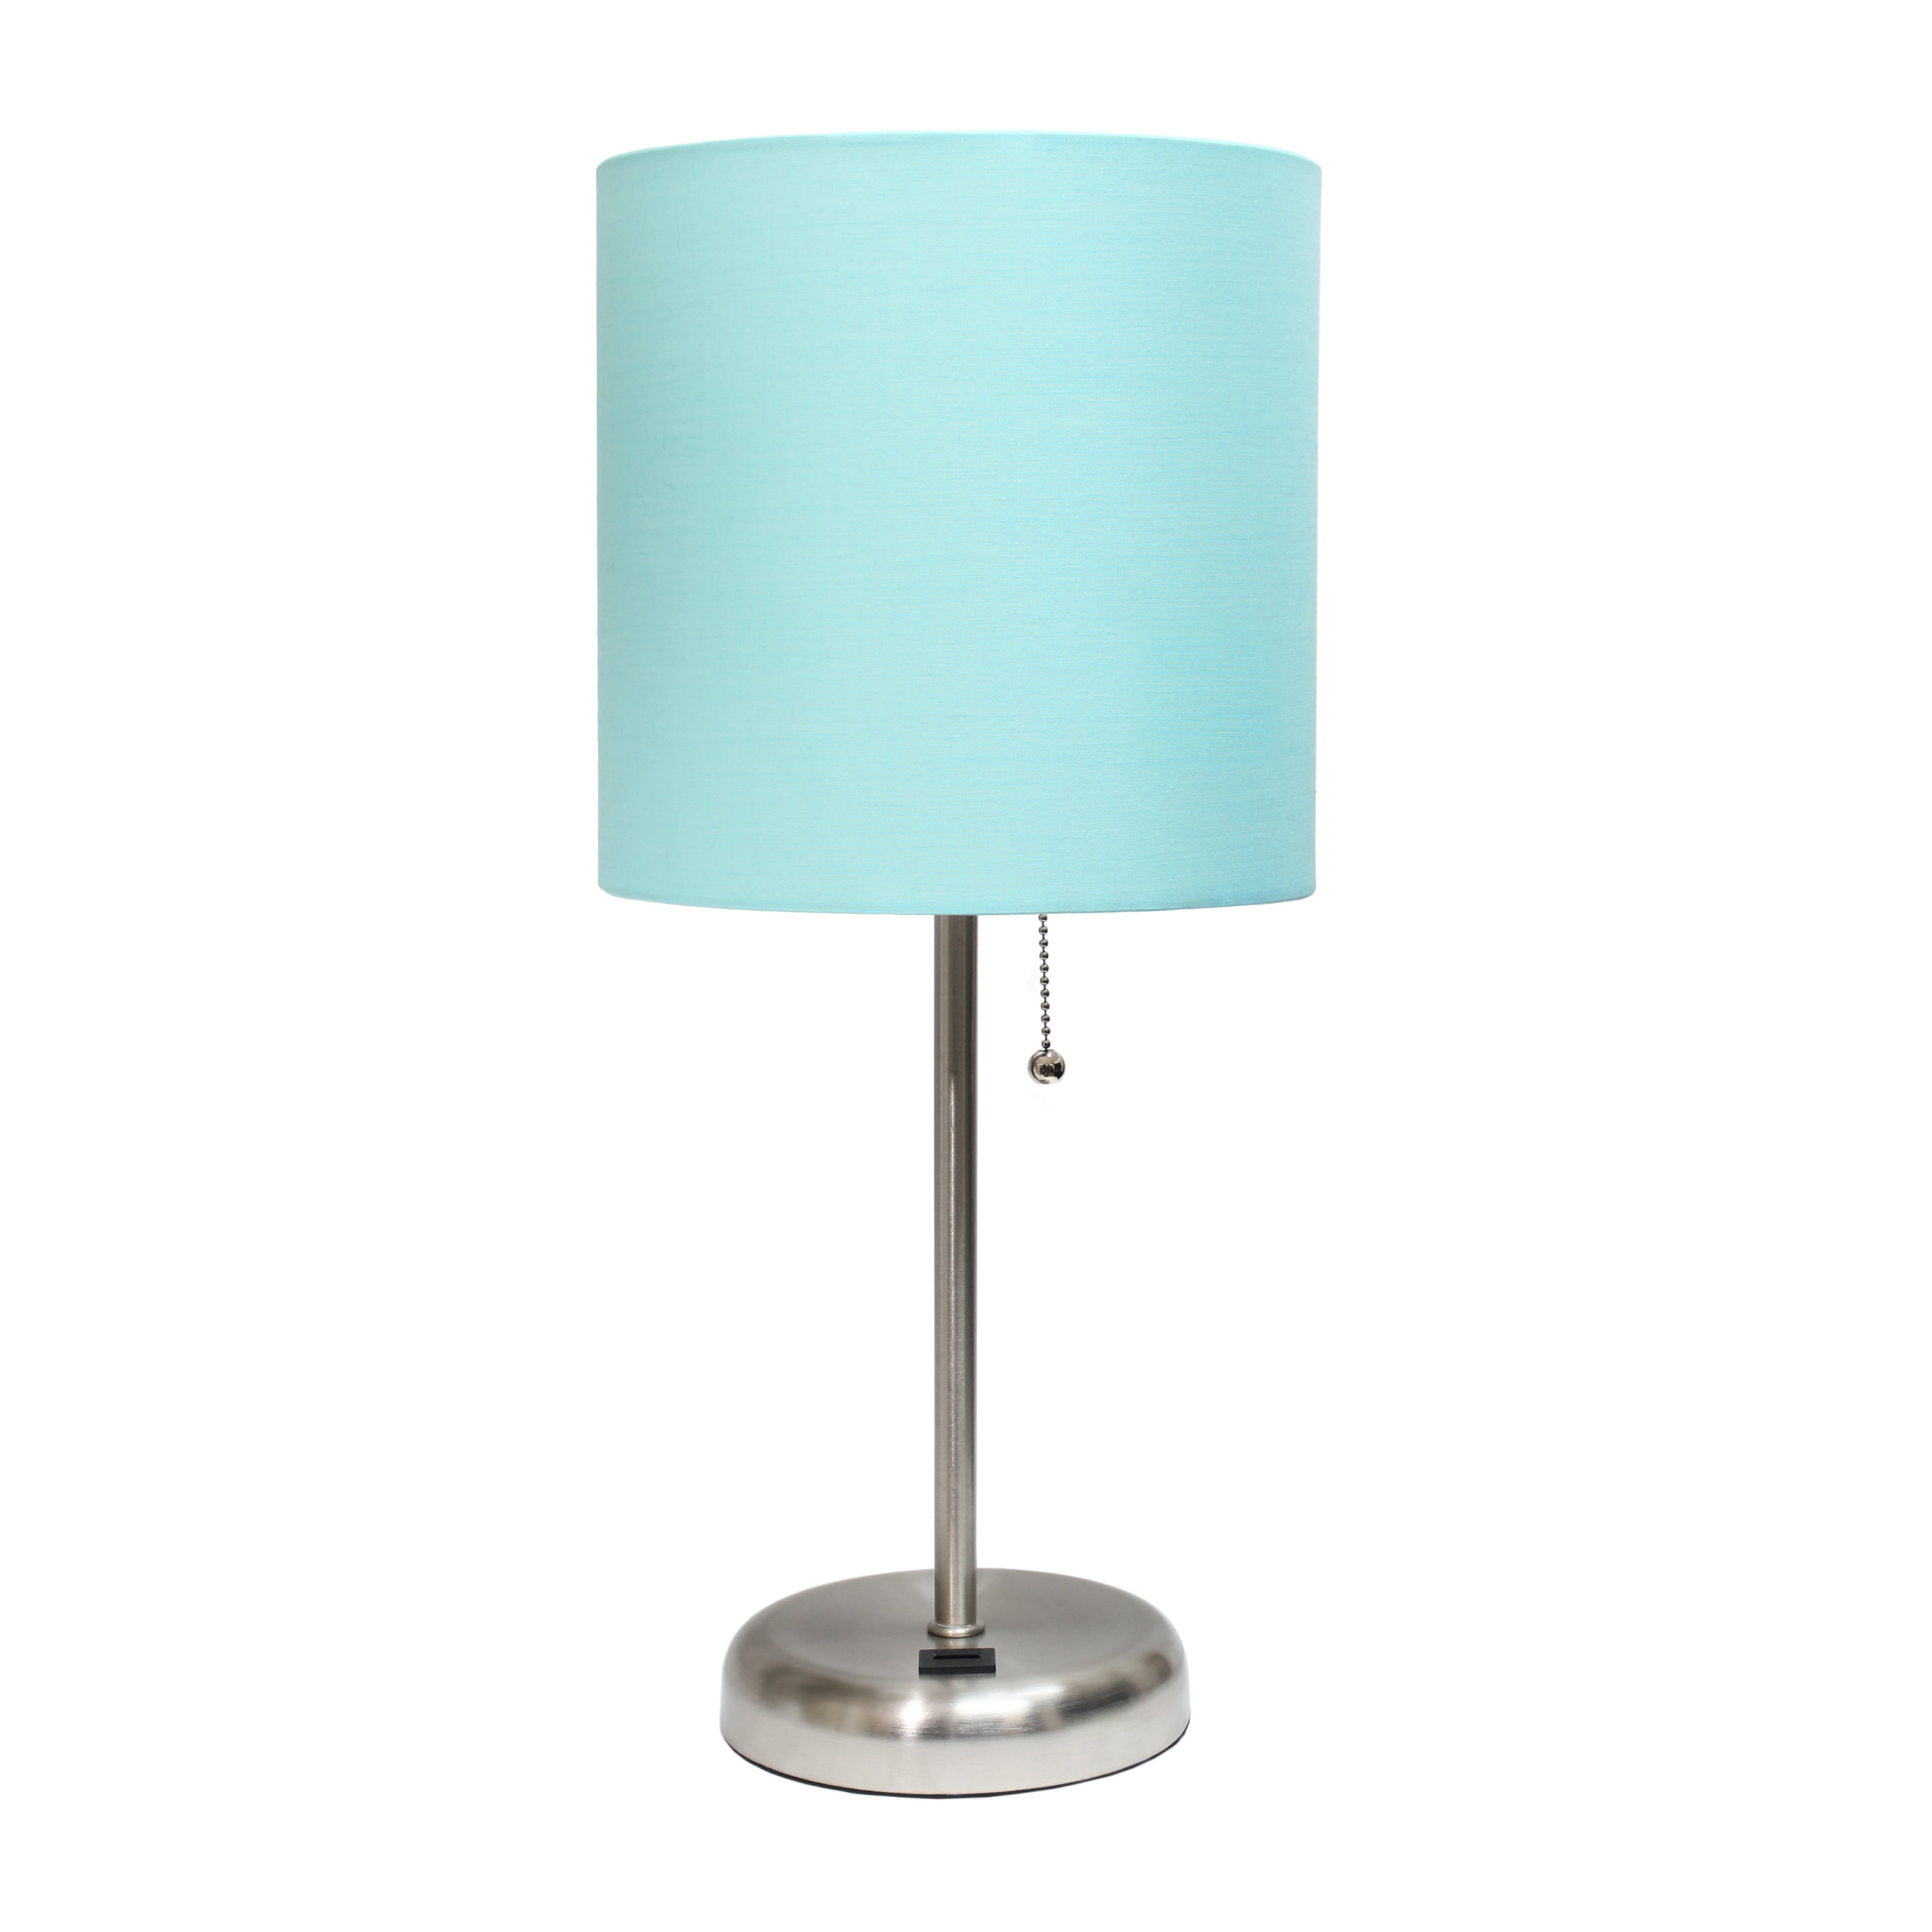 Lt2044-aqu Stick Table Lamp With Usb Charging Port & Fabric Shade, Aqua